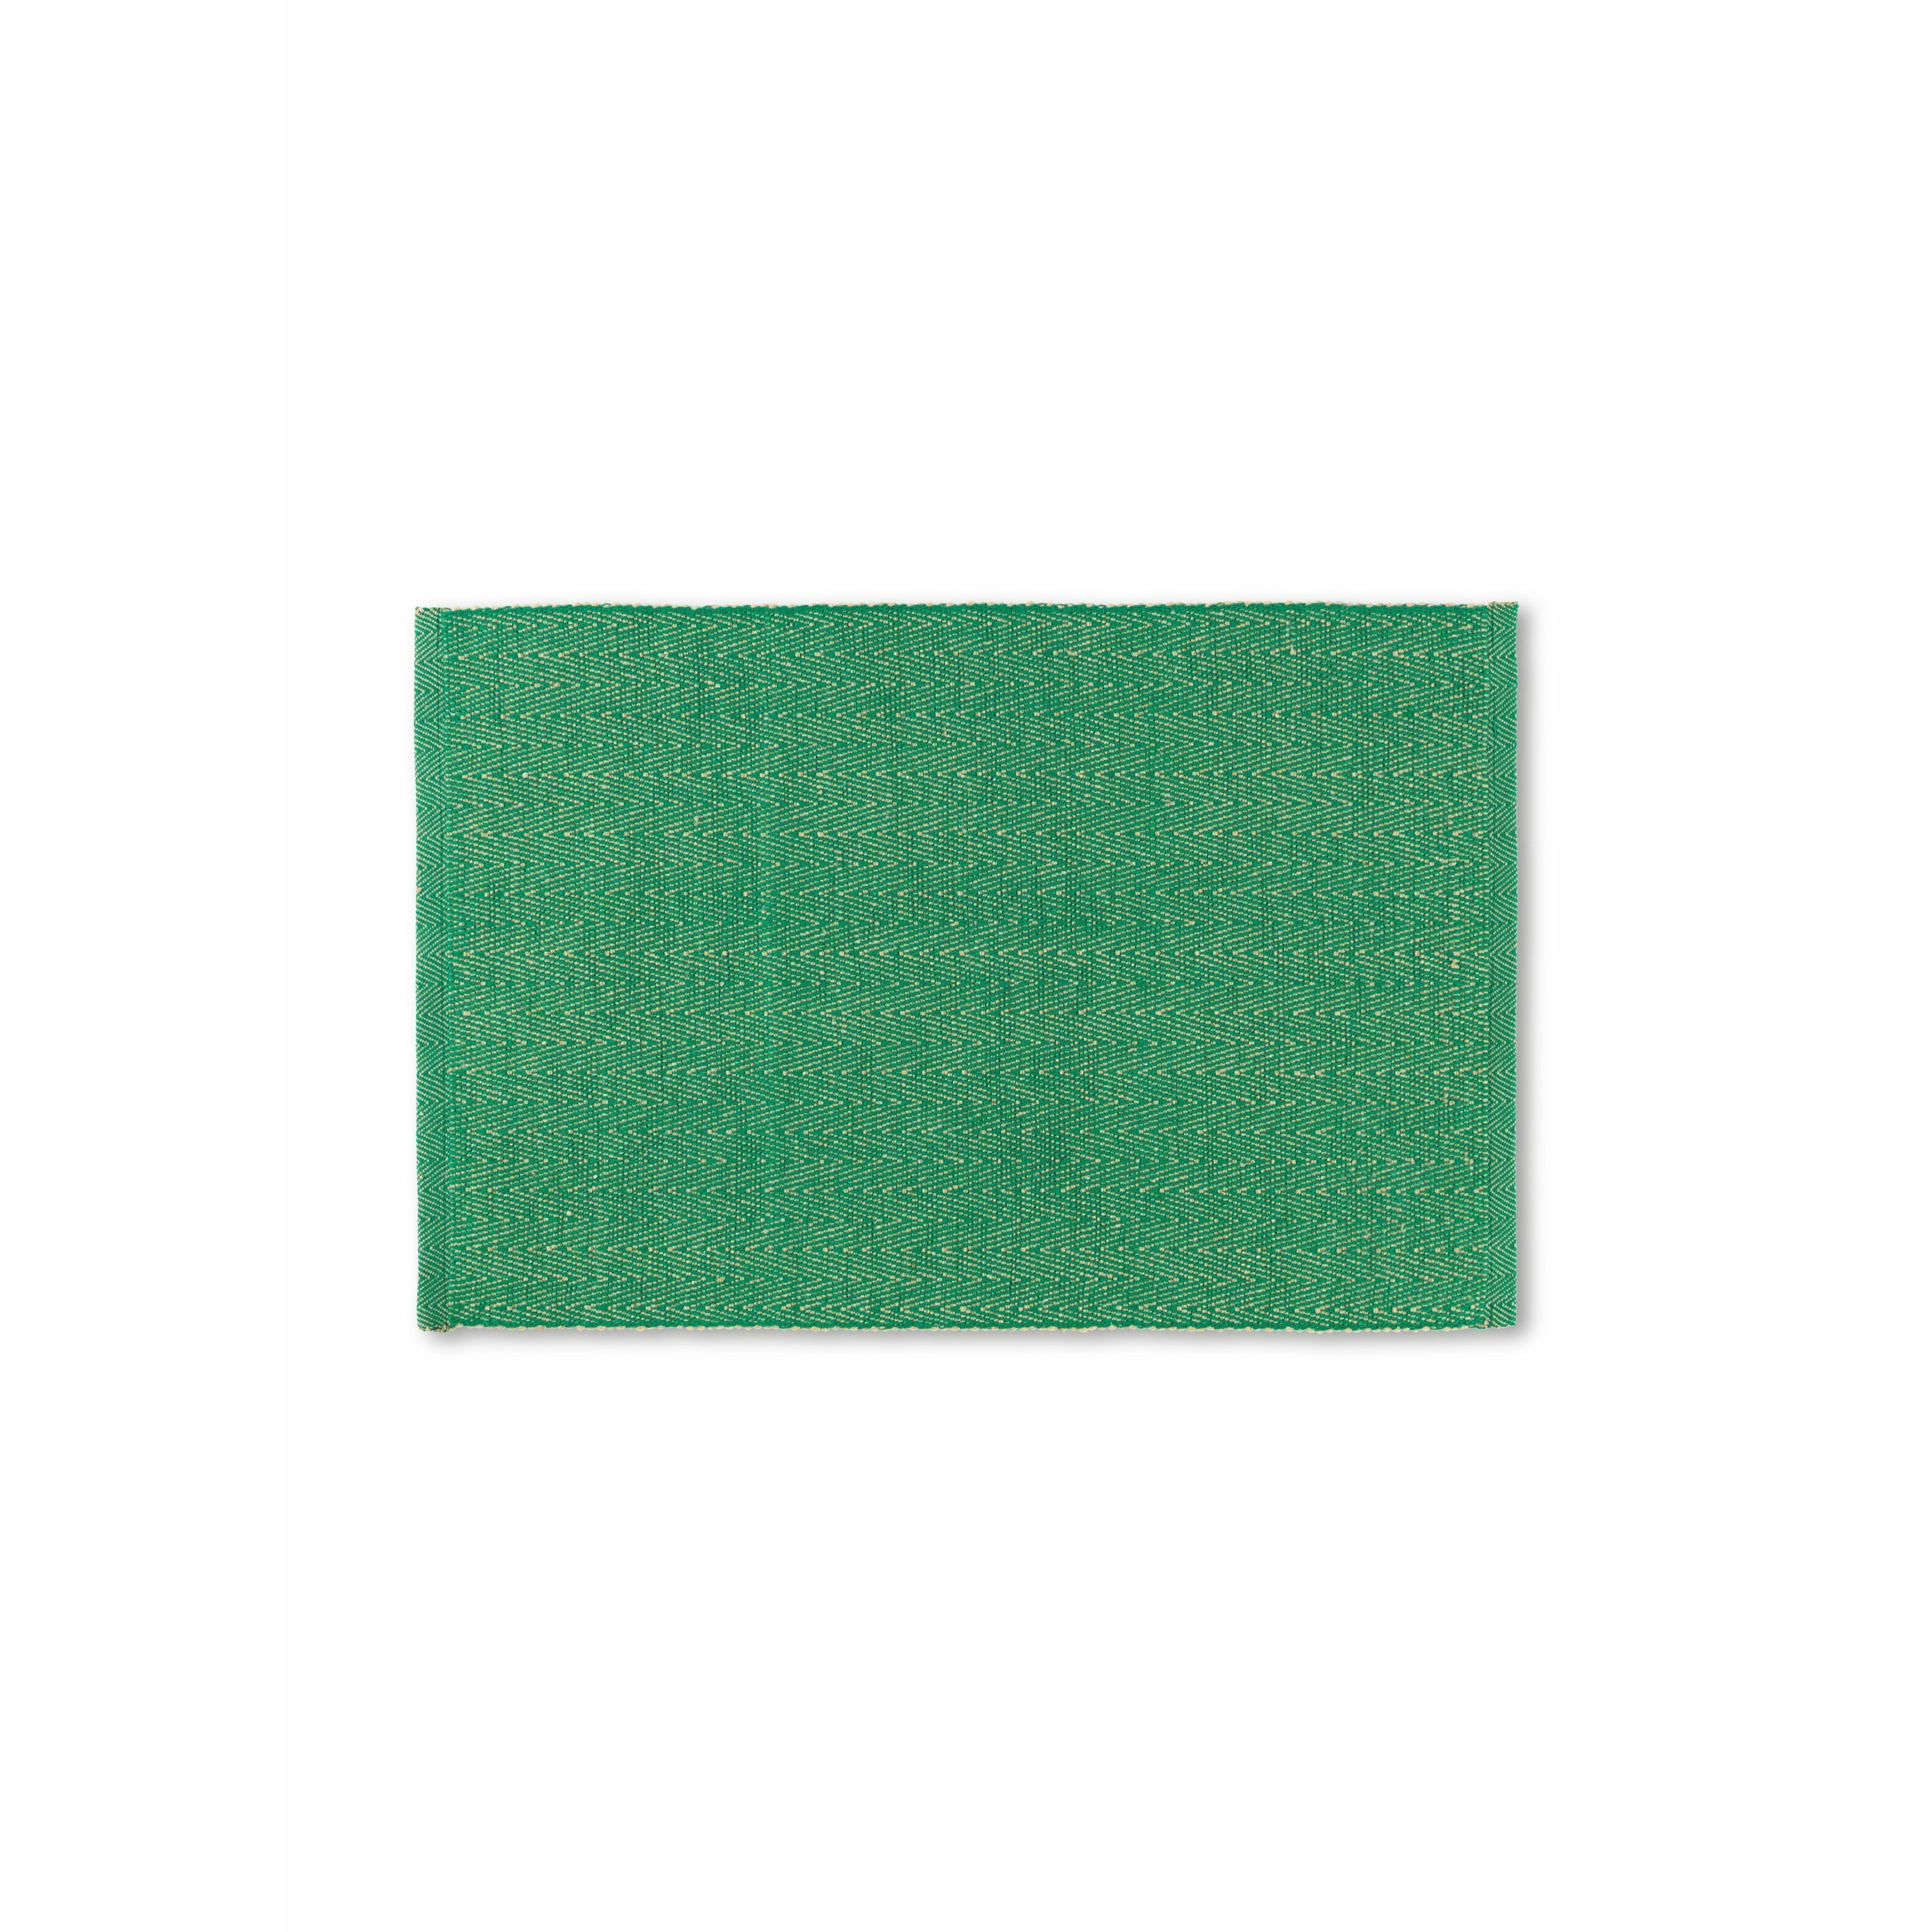 Lyngby Porscelæn Herringband Placemat 43x30 cm, groen